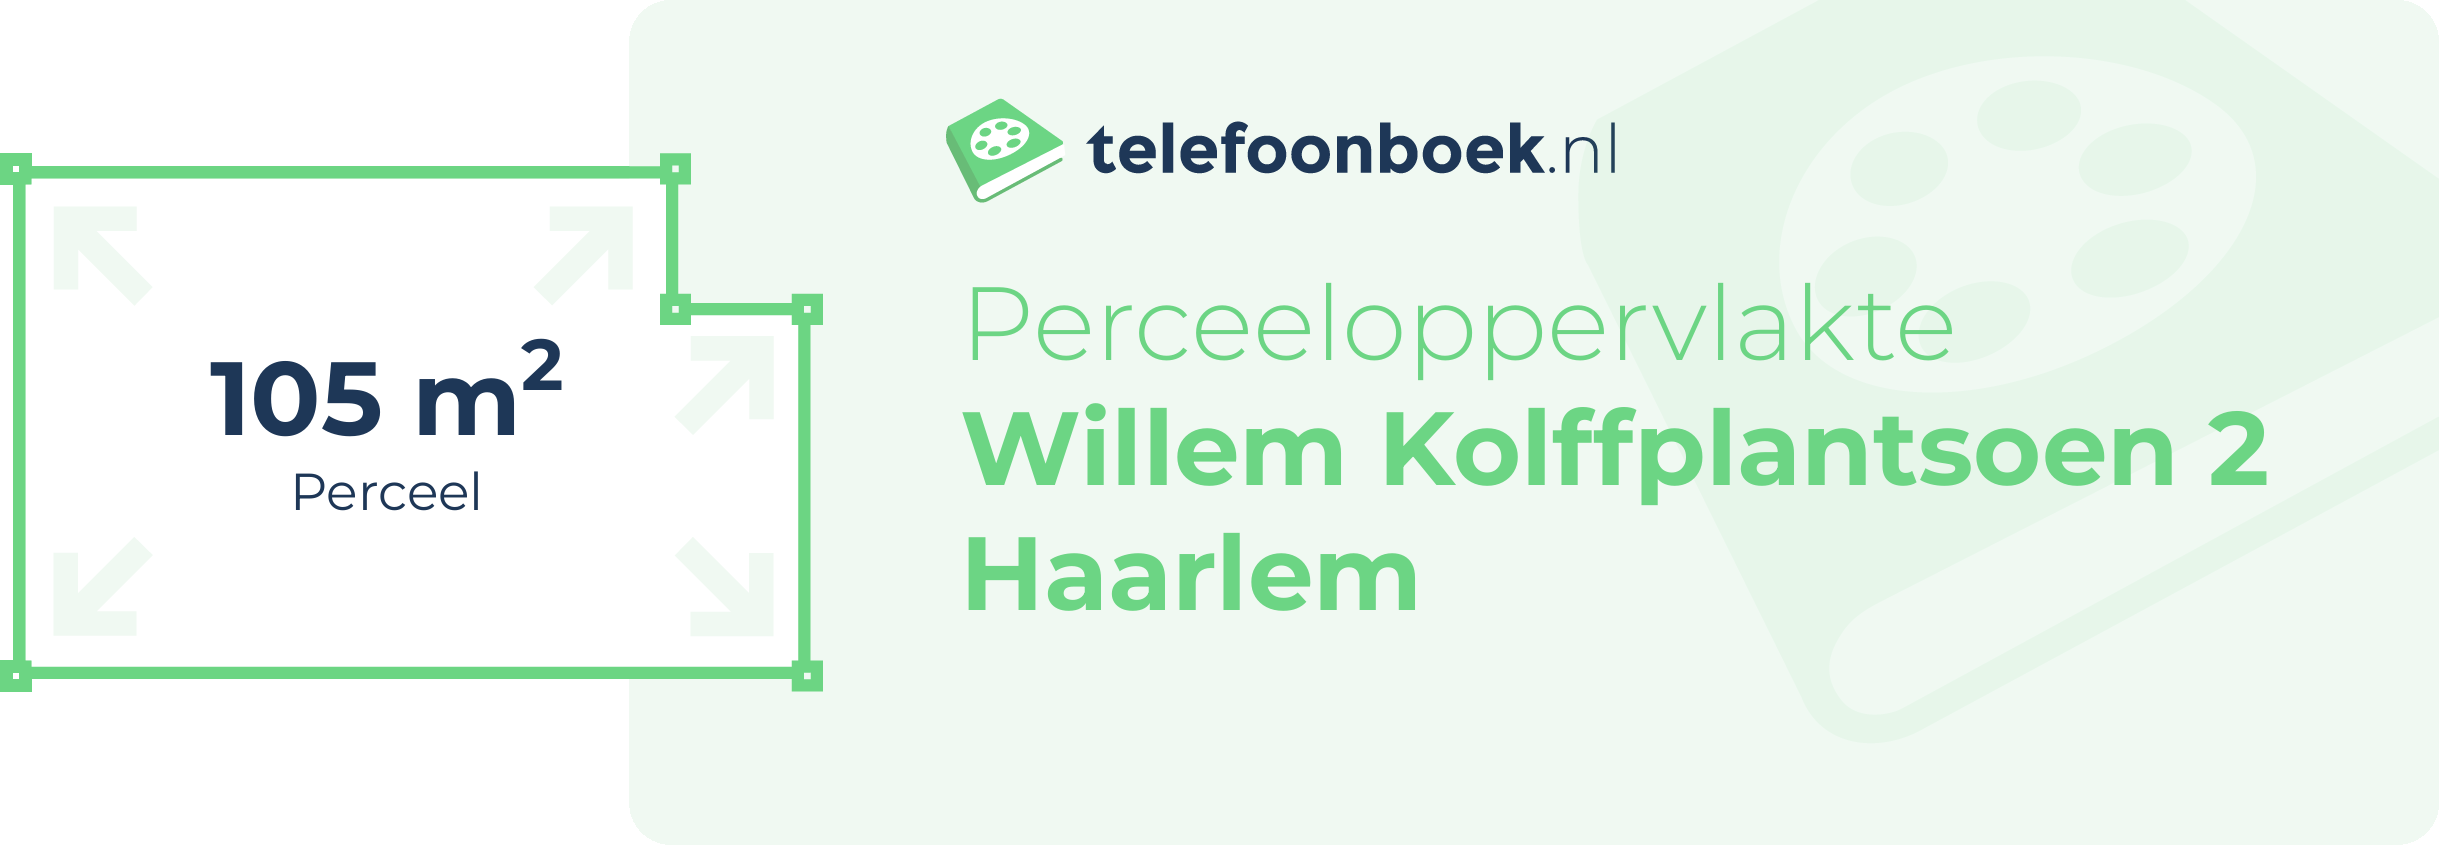 Perceeloppervlakte Willem Kolffplantsoen 2 Haarlem